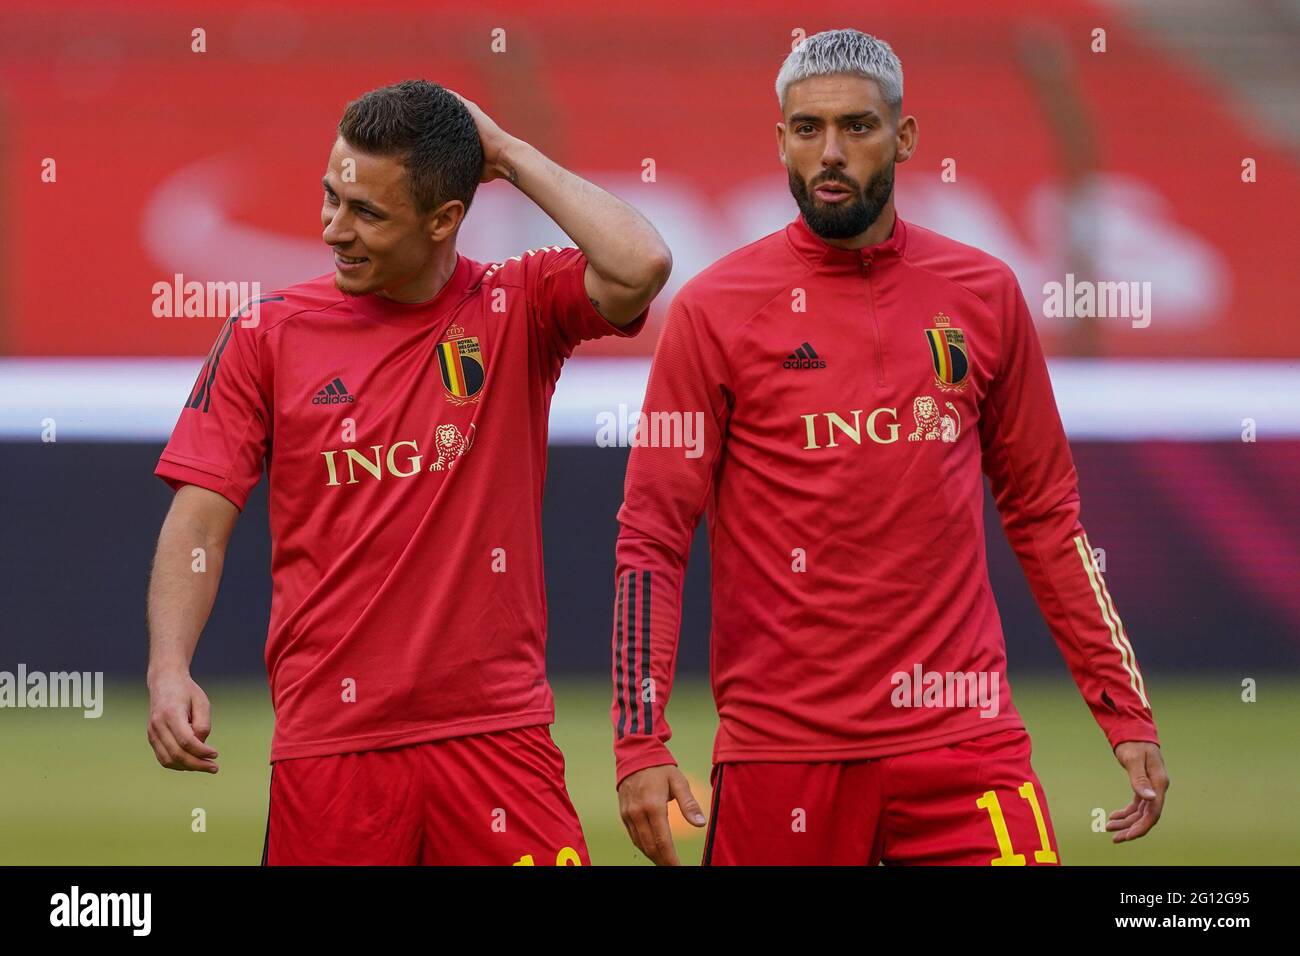 BRUSSEL, BELGIUM - JUNE 3: Thorgan Hazard of Belgium and Yannick Carrasco of Belgium during the International Friendly match between Belgium and Greec Stock Photo